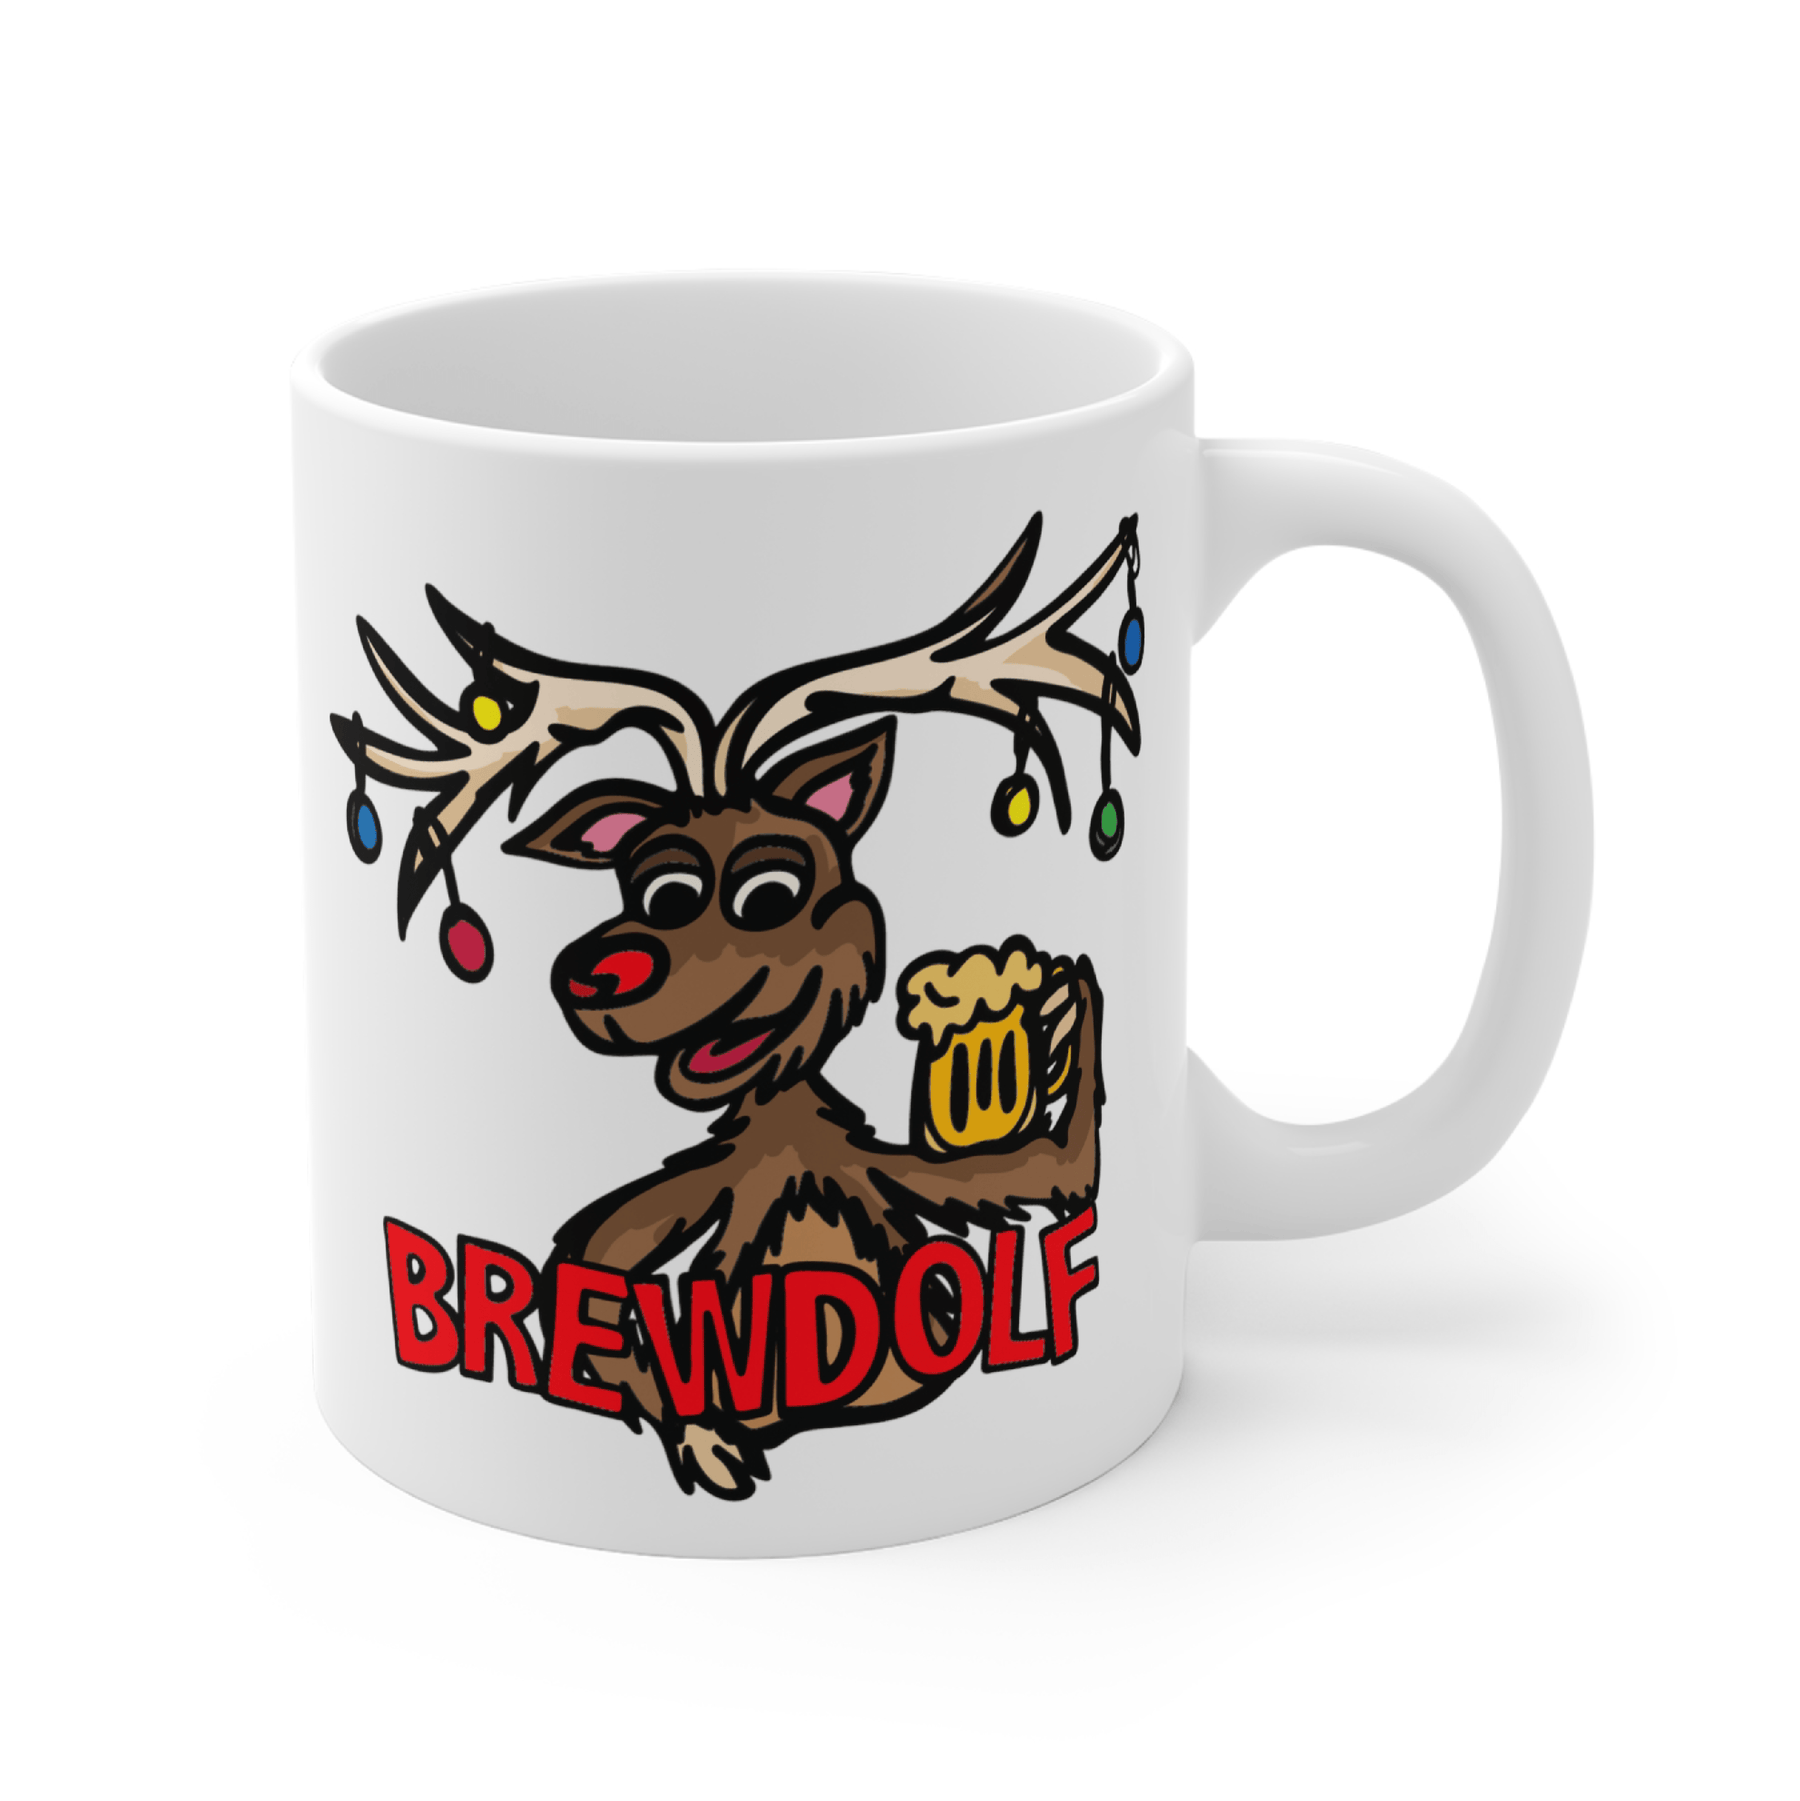 Brewdolf 🦌 – Coffee Mug